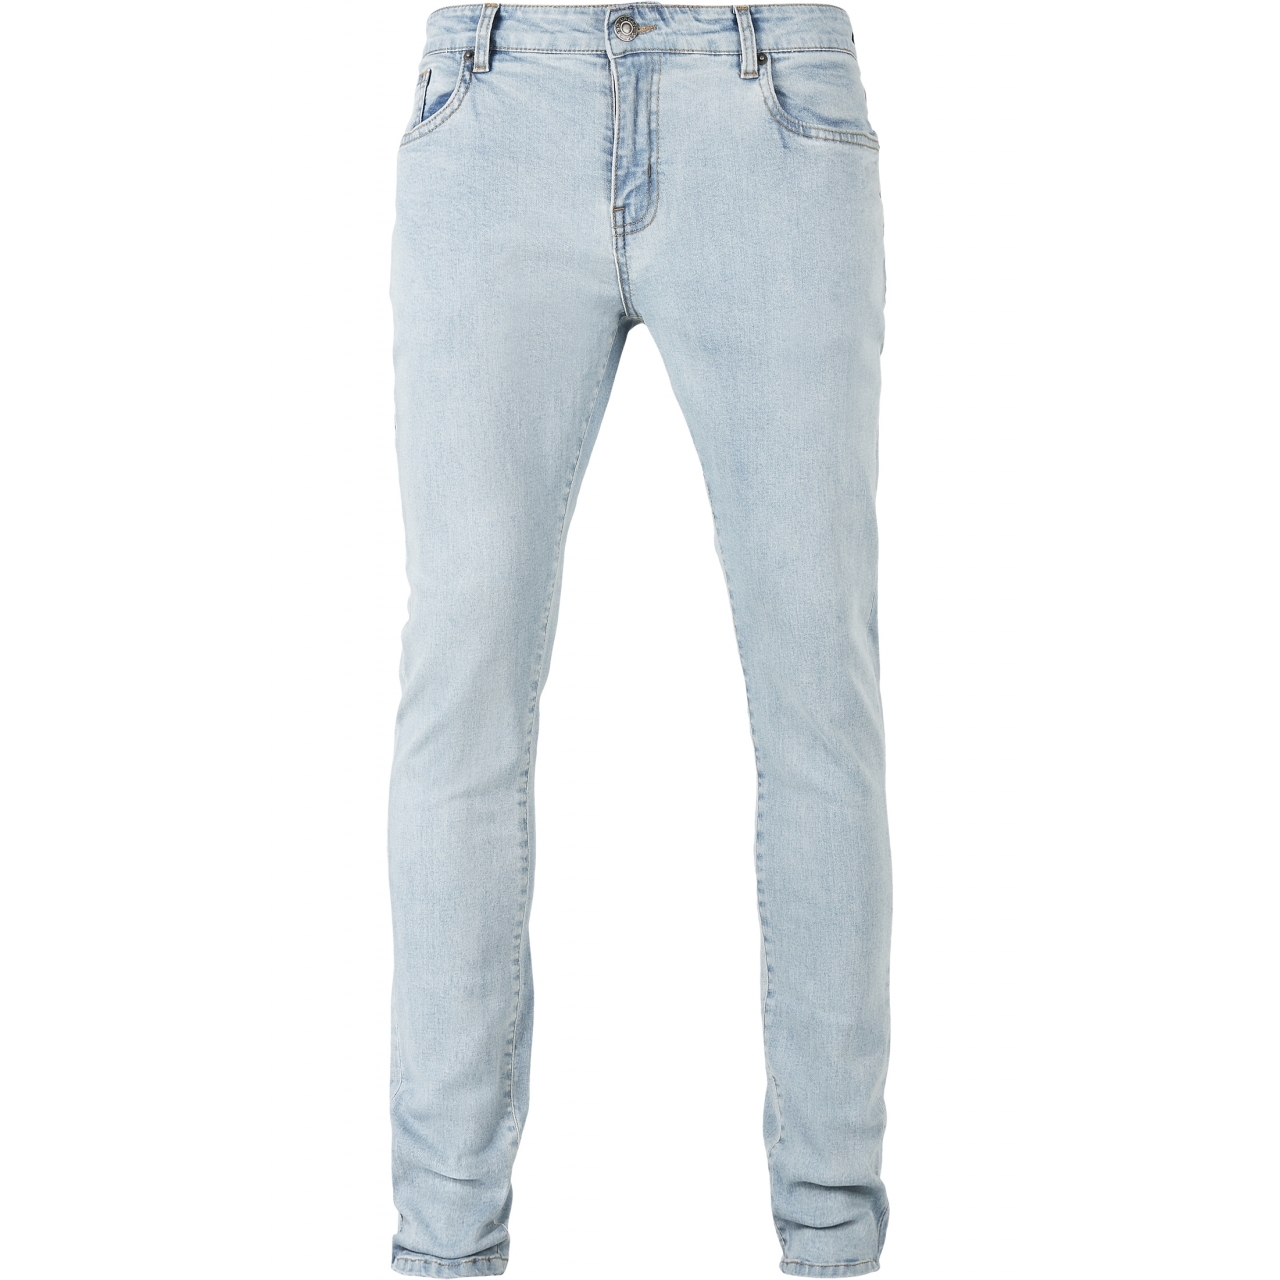 Džíny Urban Classics Slim Fit Zip Jeans - modré, 38/34